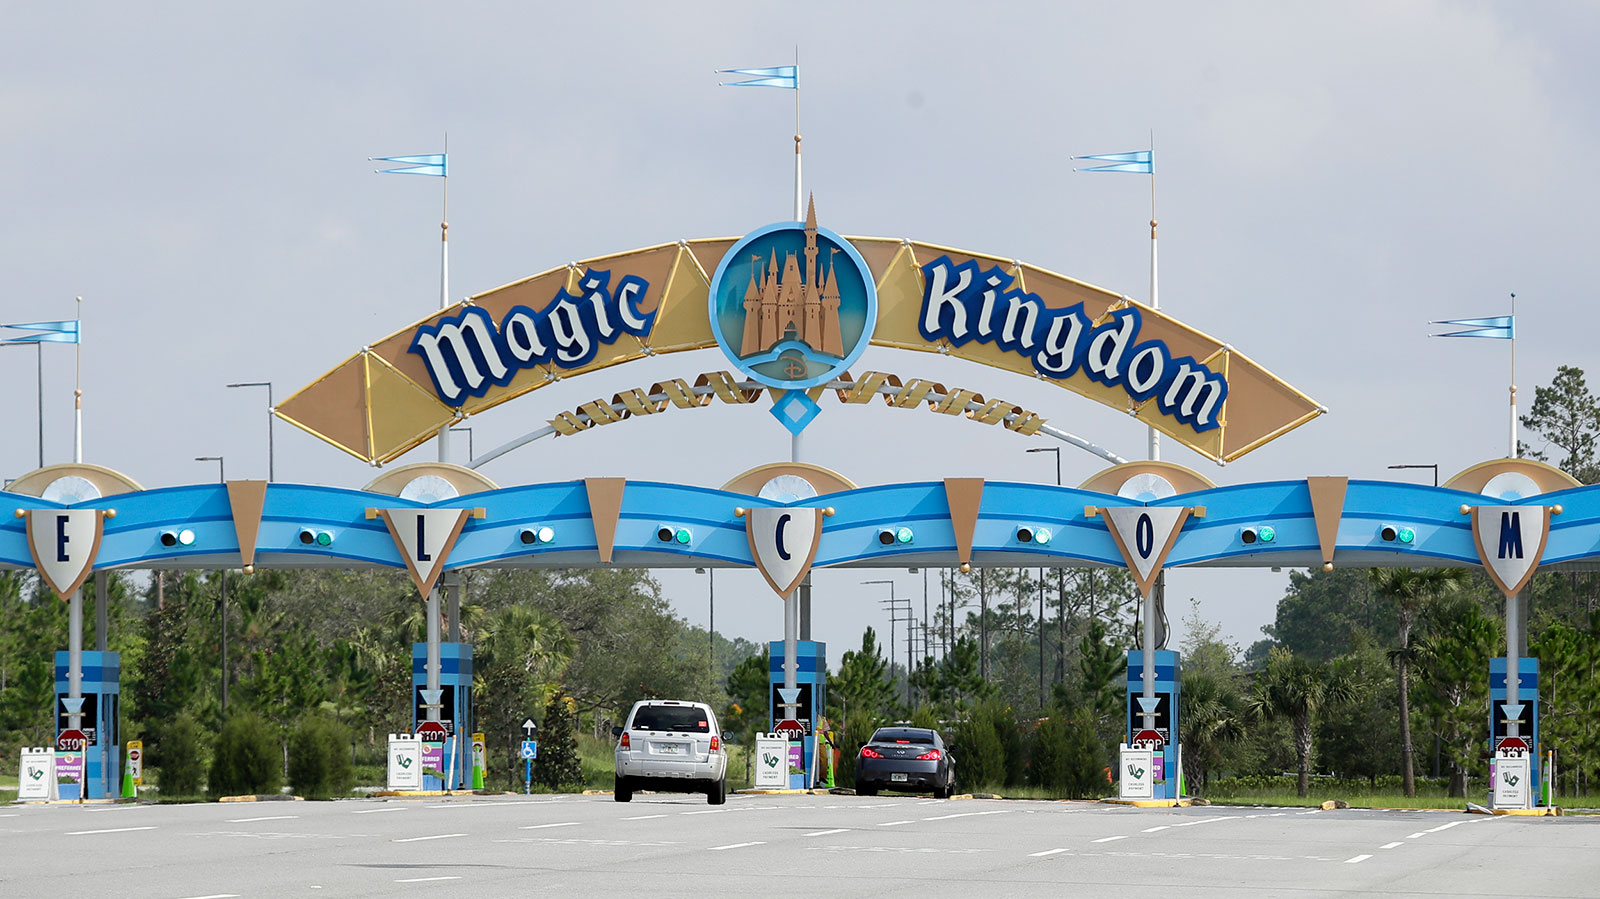 Park guests arrive at Walt Disney World in Lake Buena Vista, Florida, on Saturday, July 11.